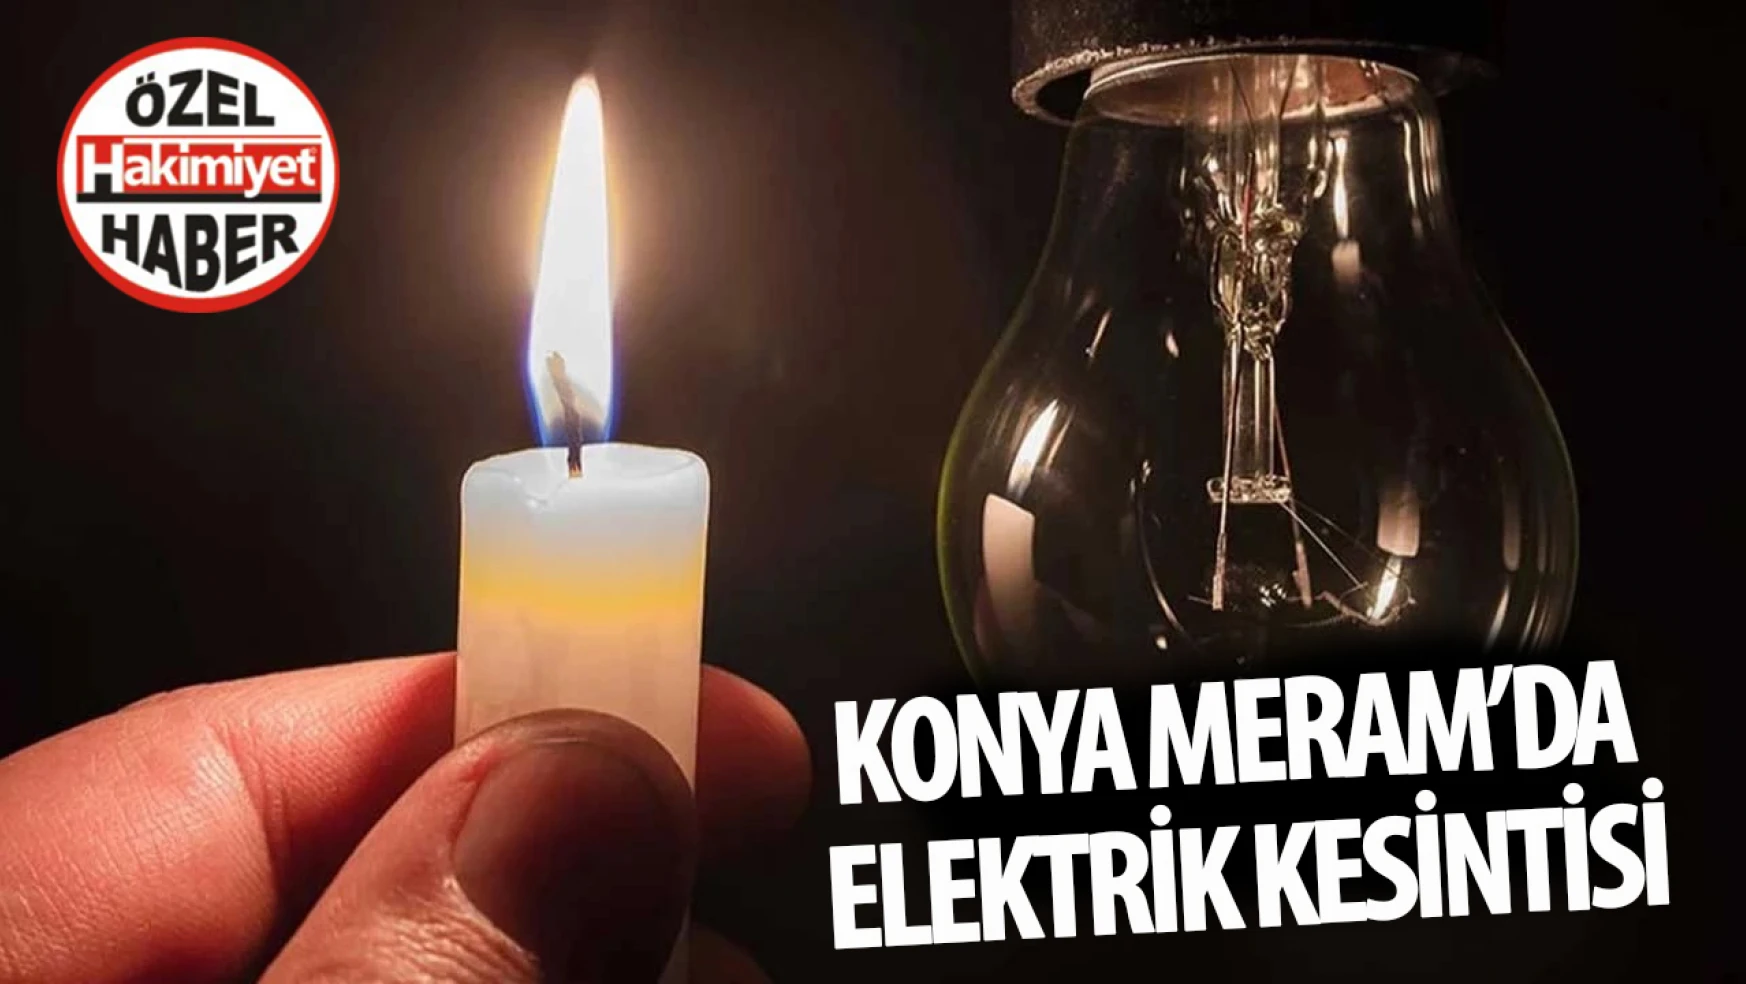 Konya Meram'da Elektrik Kesintisi! ​​​​​​​